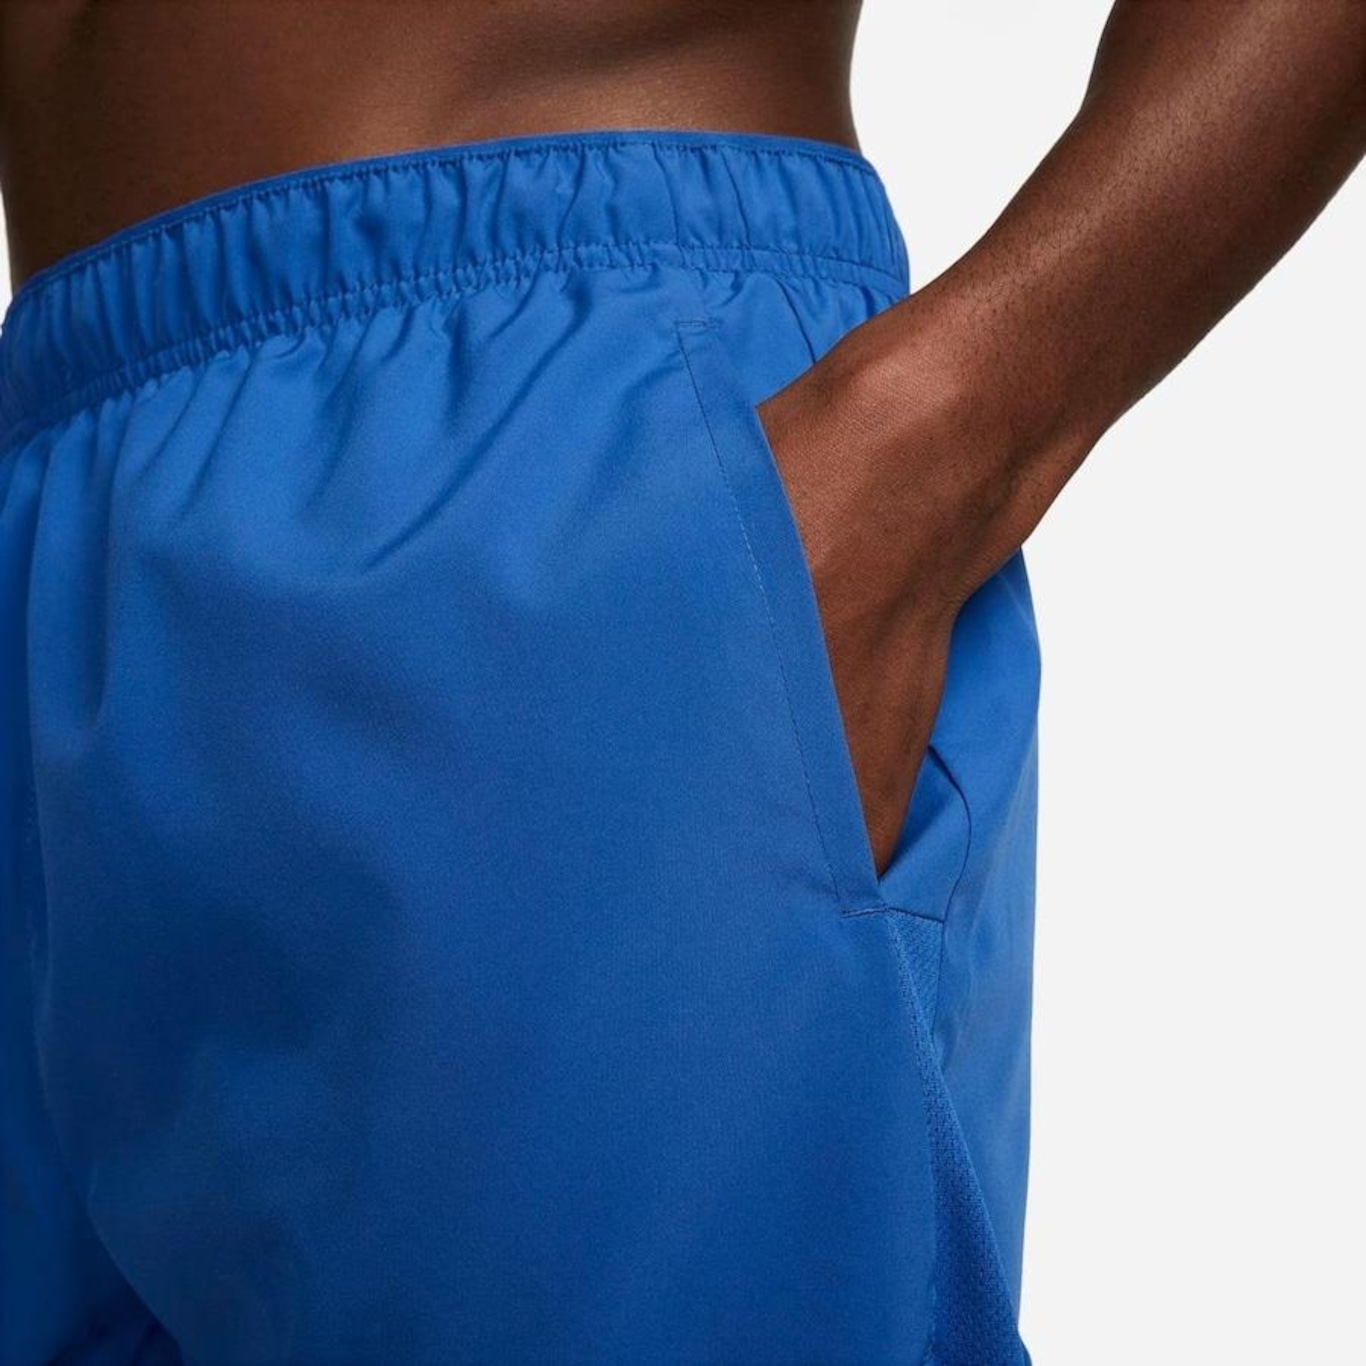 Shorts Nike Dri-FIT Challenger Masculino - Azul